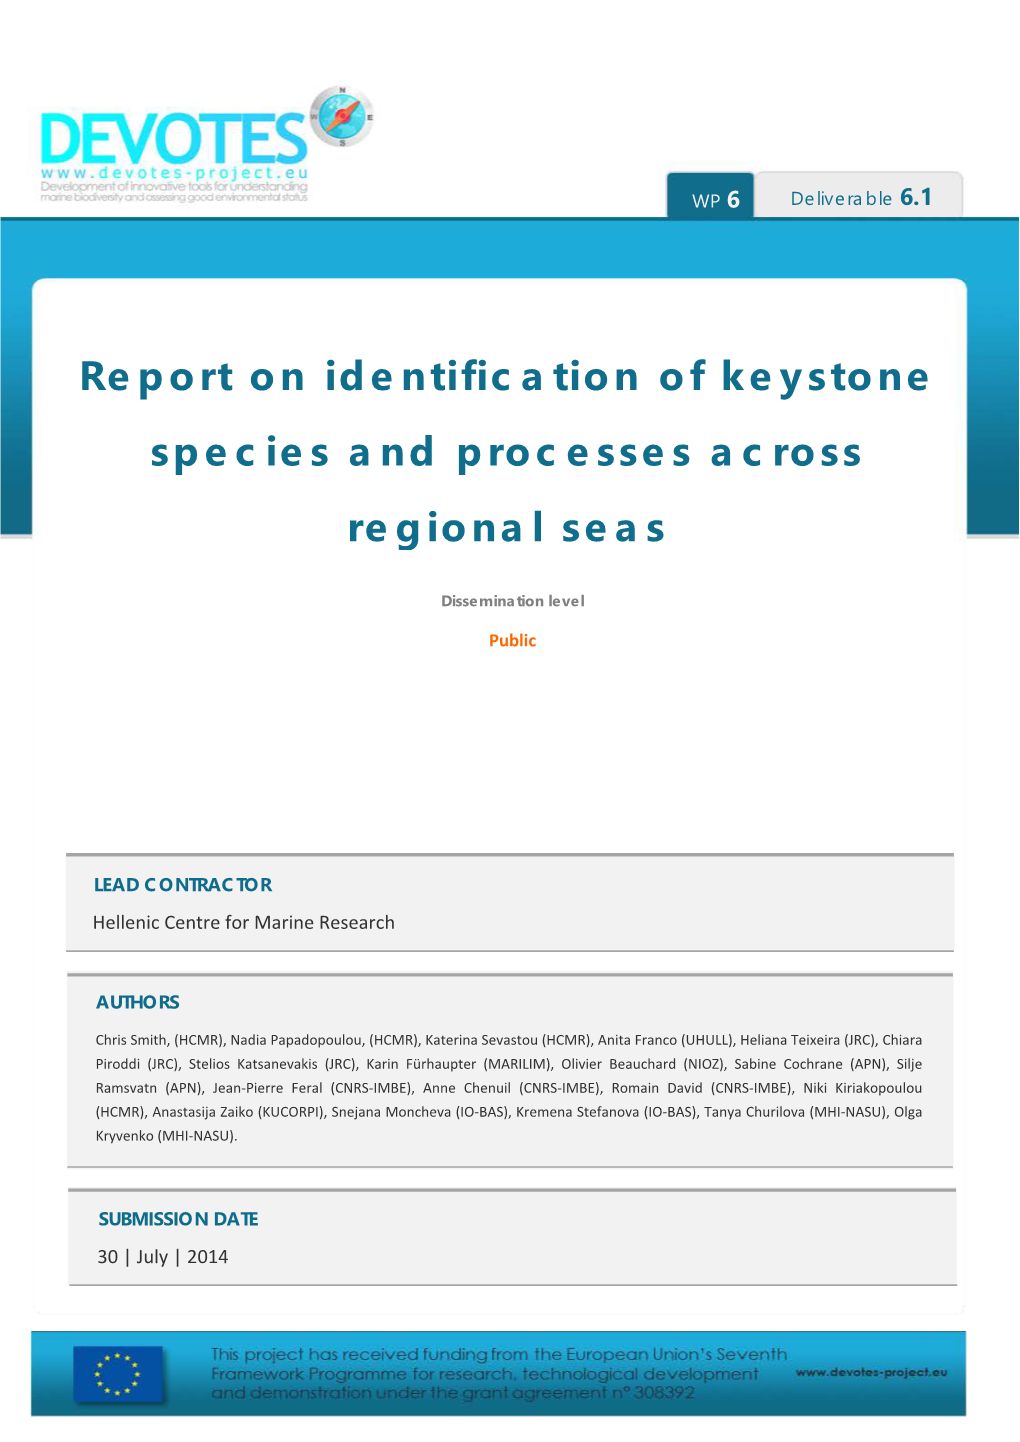 Report on Identification of Keystone Species and Processes Across Regional Seas